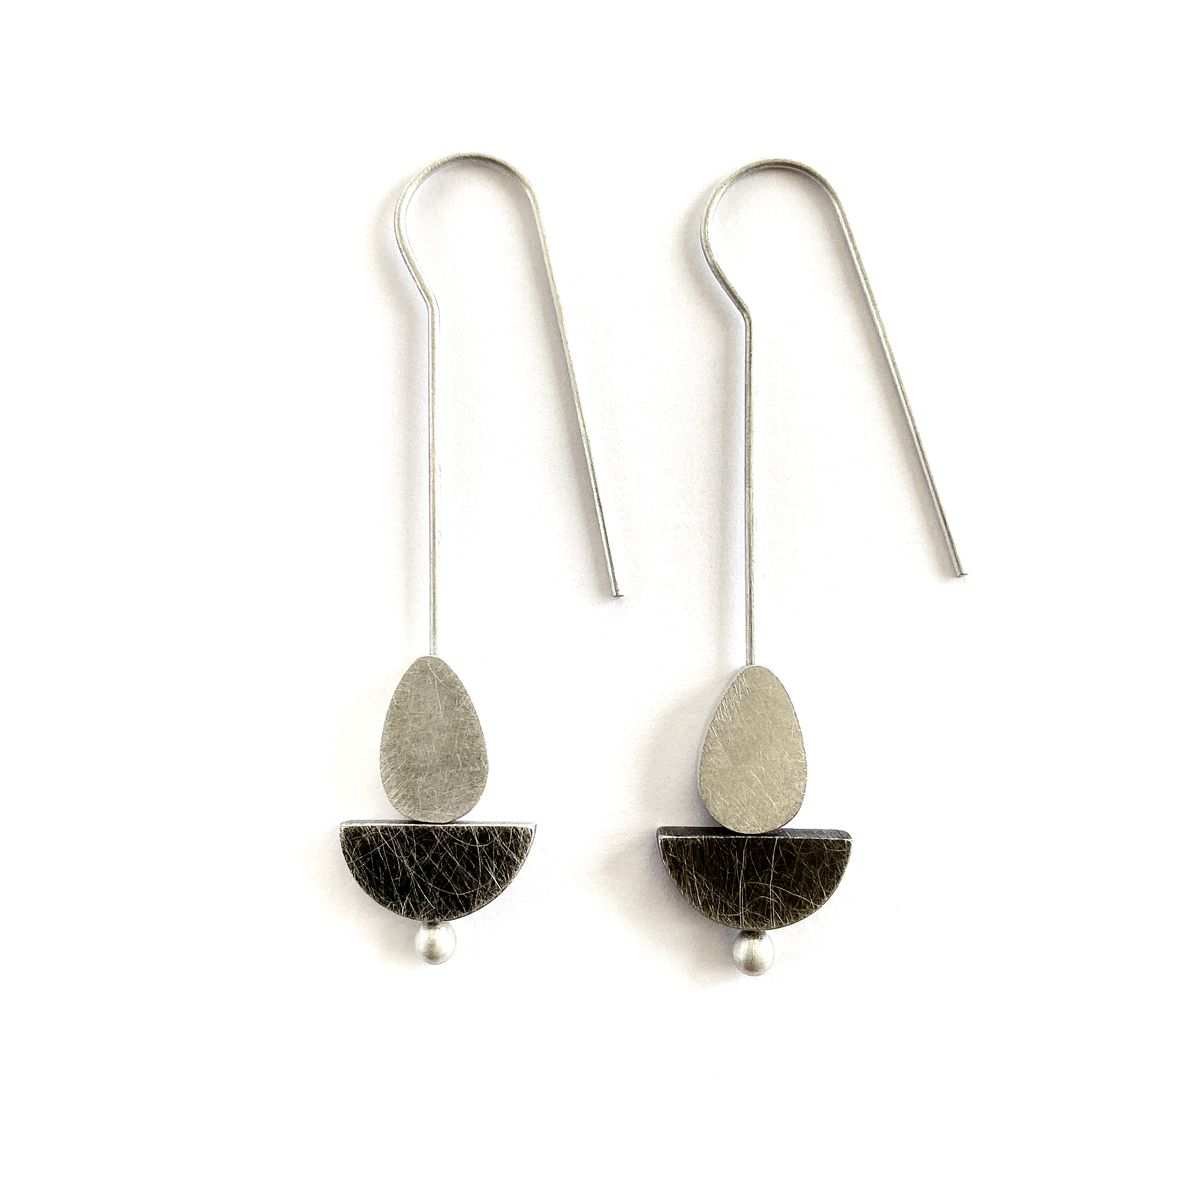 Ebb & Flow Earrings, sterling silver, 2020, Kate Alterio